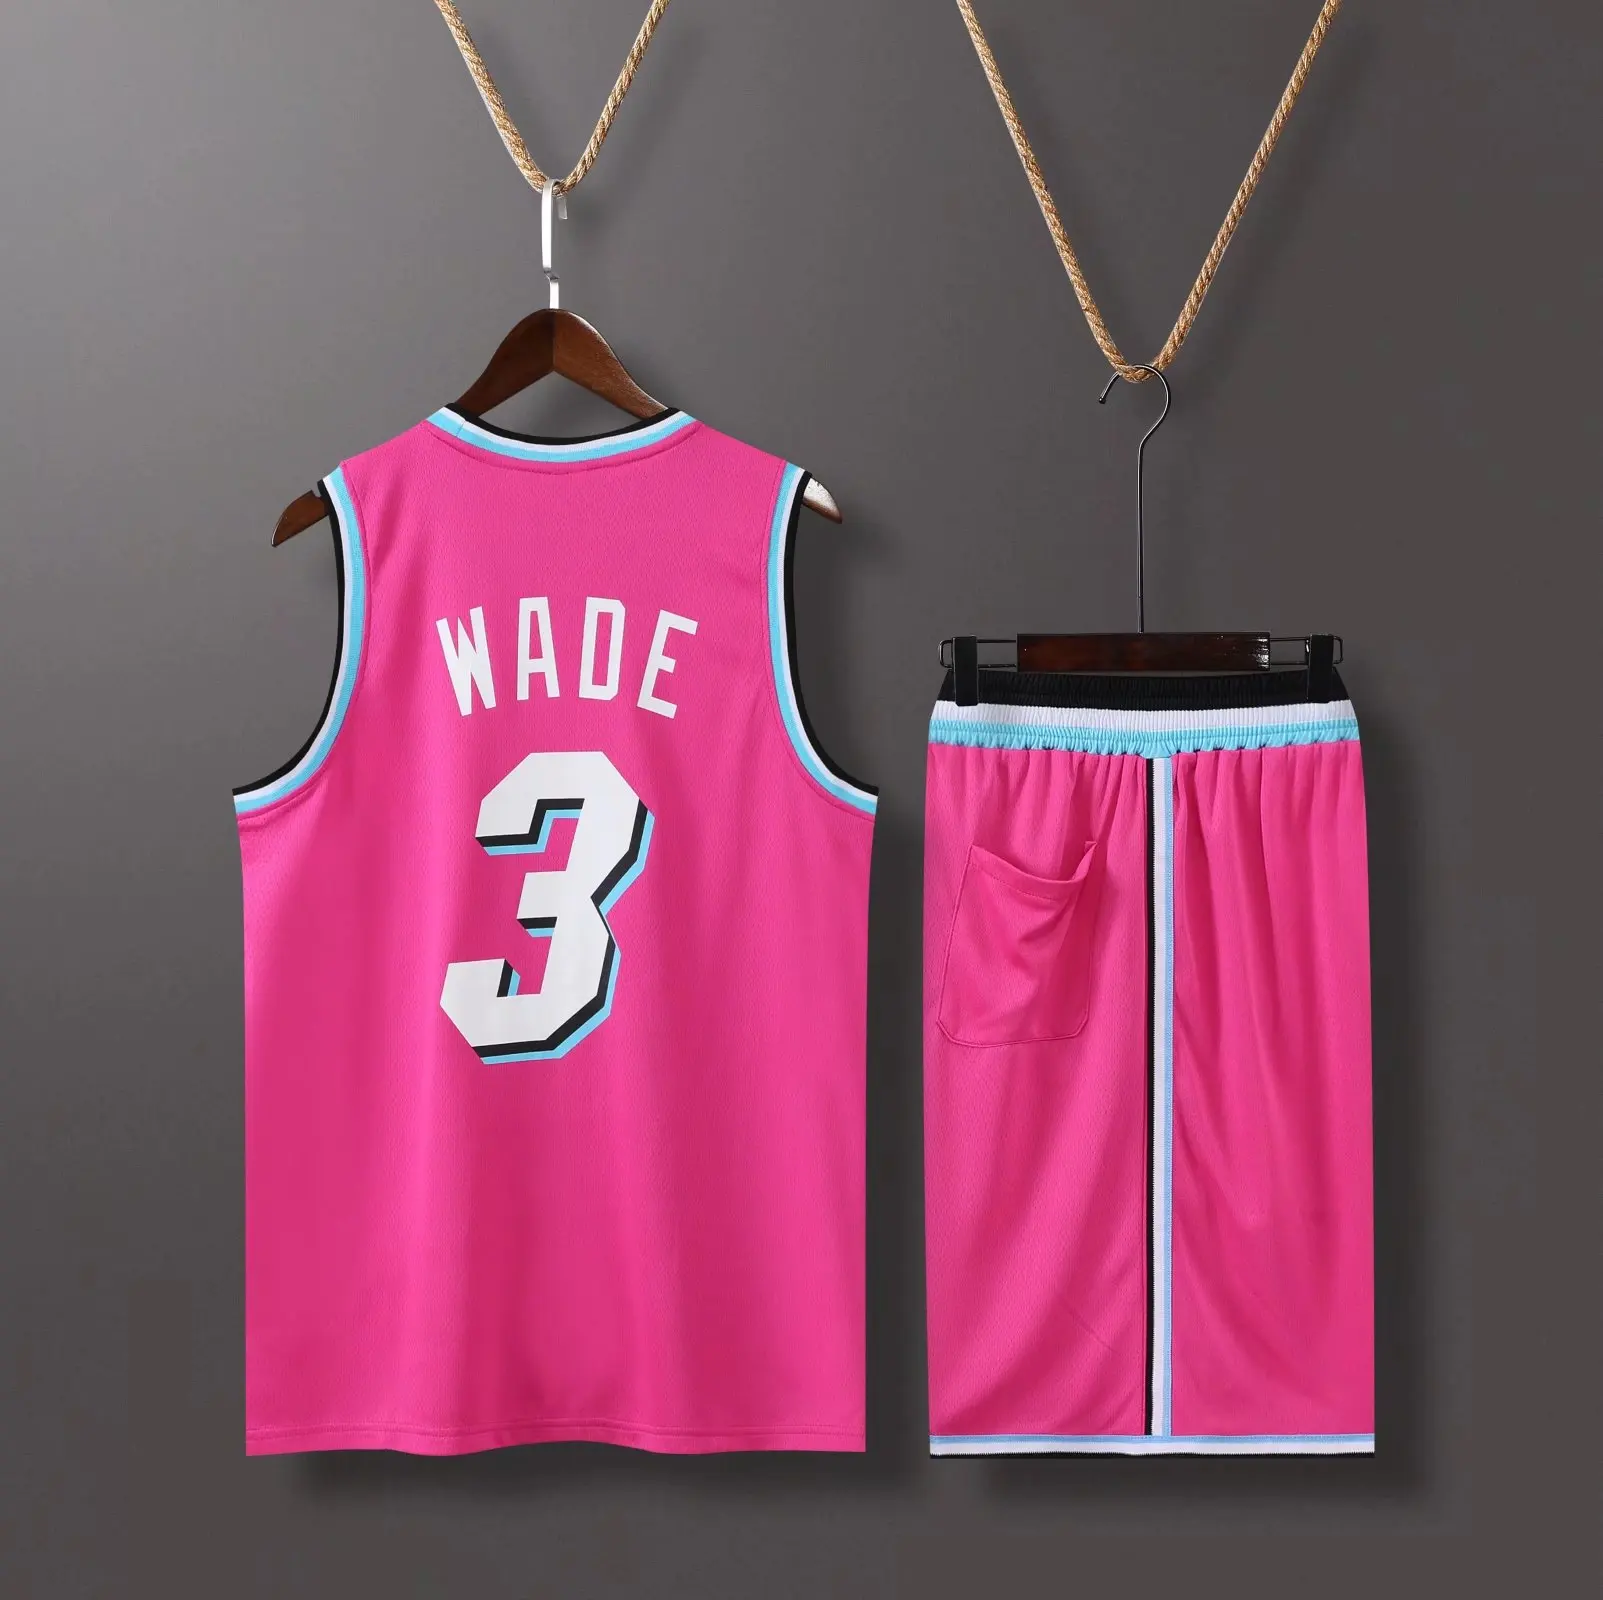 

High Quality USA Basketball Club Player Basketball Uniforms Star WADE 3 CITY EDITION Has Team Logo Basketball Jerseys